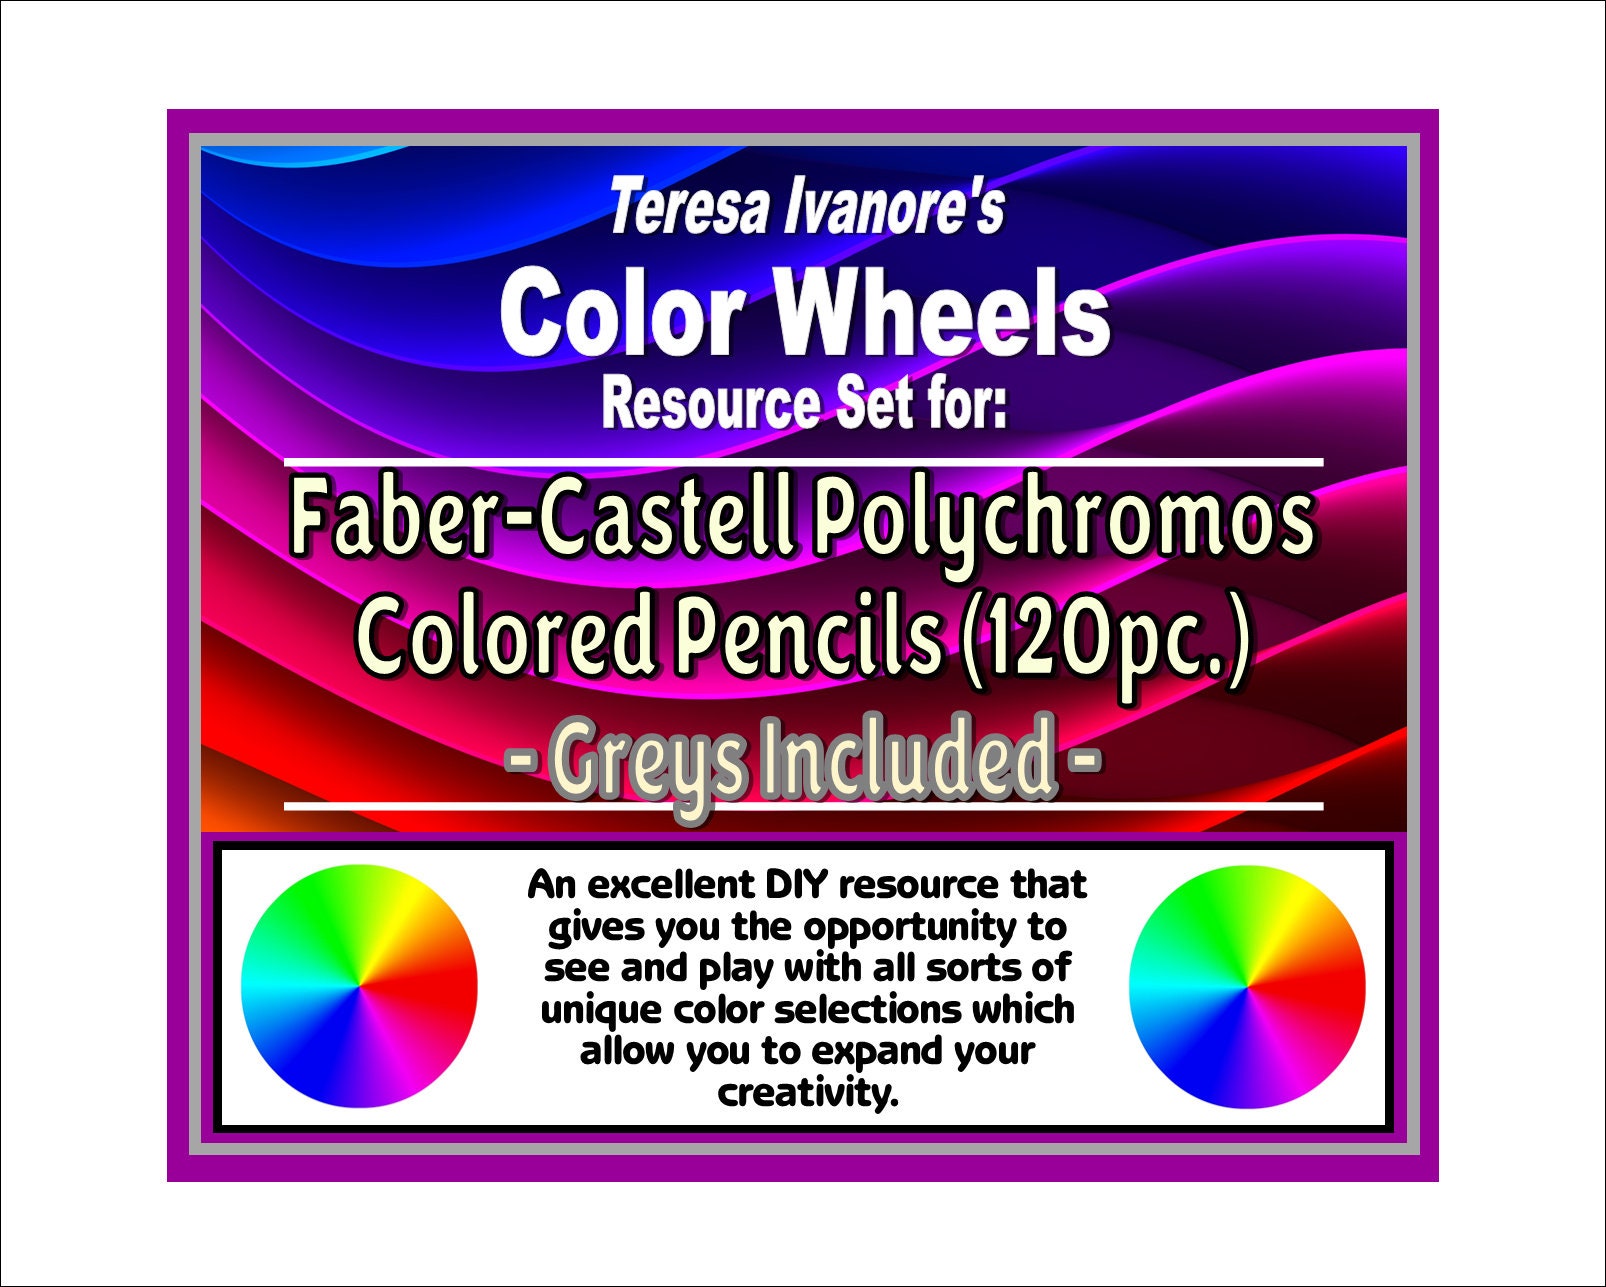 Organizate - Lo nuevo de Faber Castell: Lapices de colores